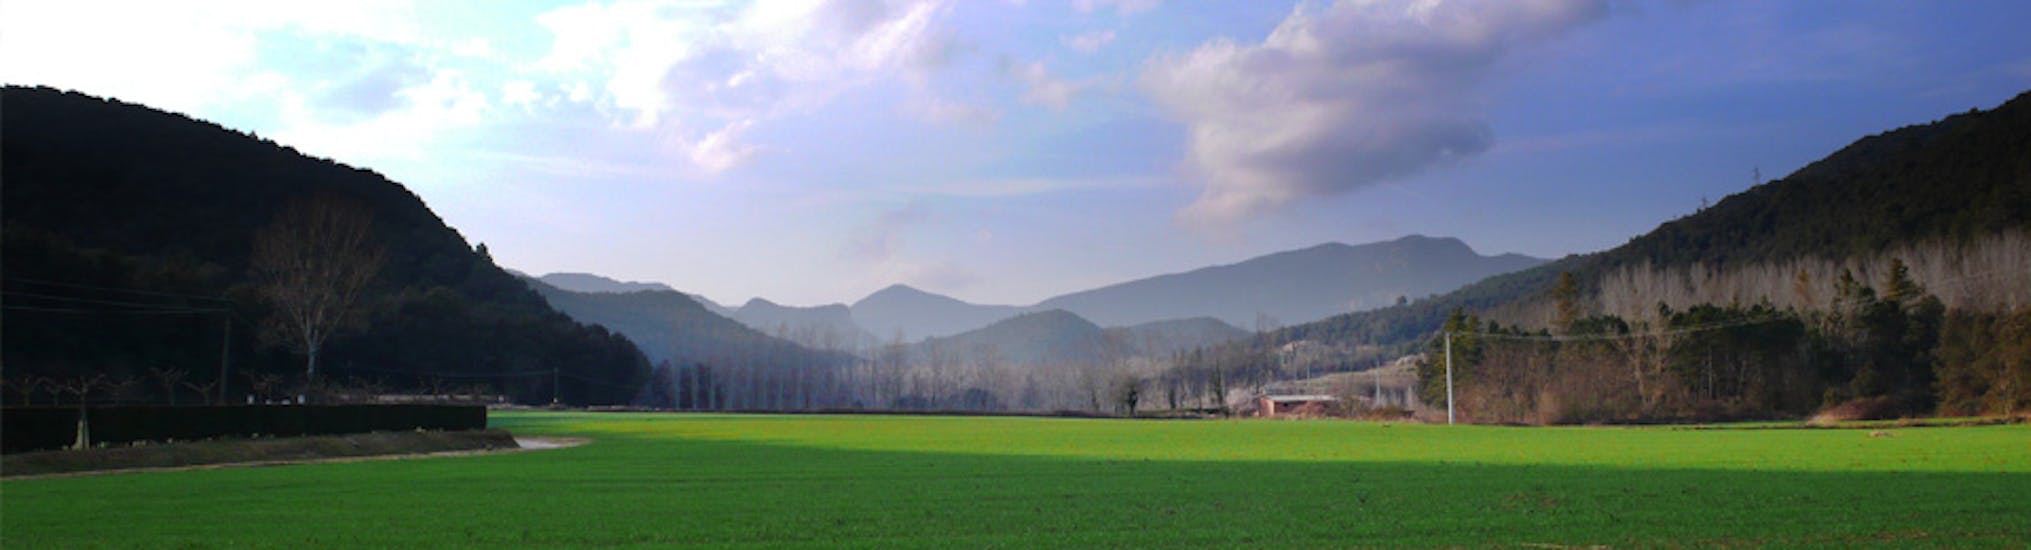 Llémena Valley, nature entre le Gironès et la Garrotxa